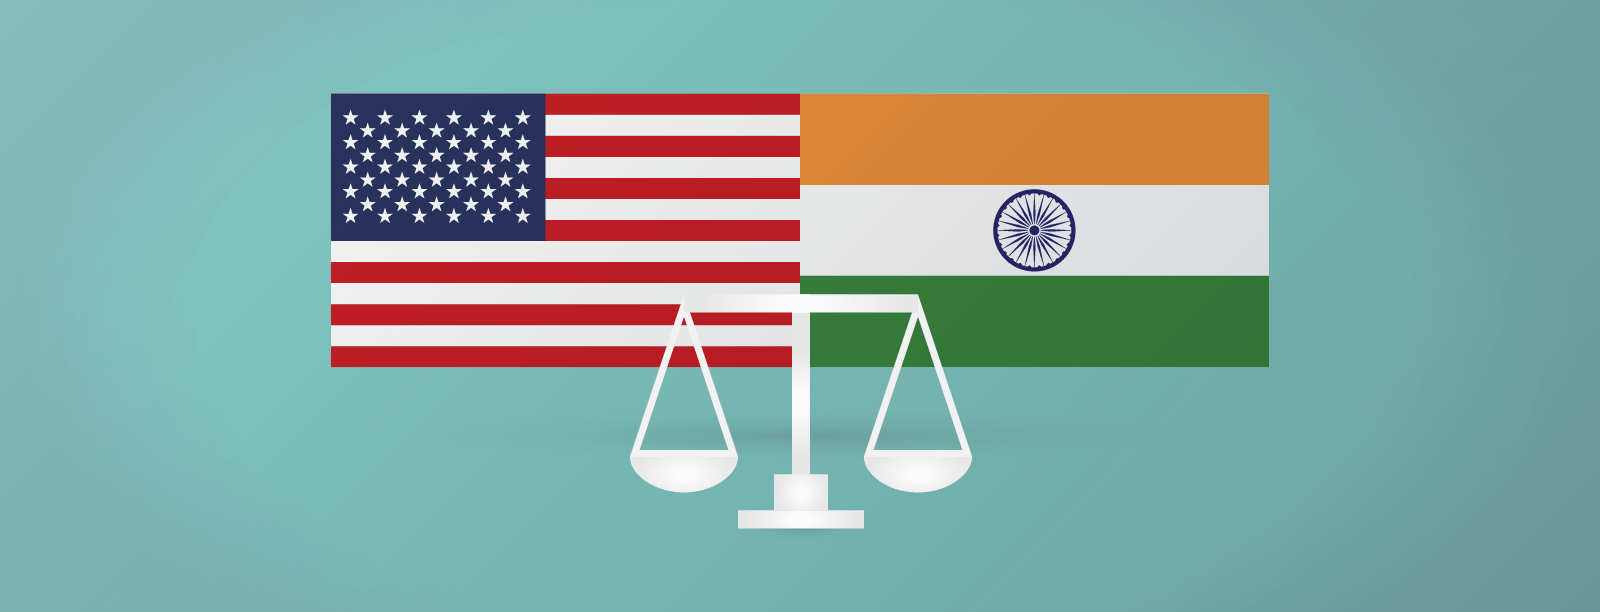 eComparison: US vs. Indian Startup Ecosystem